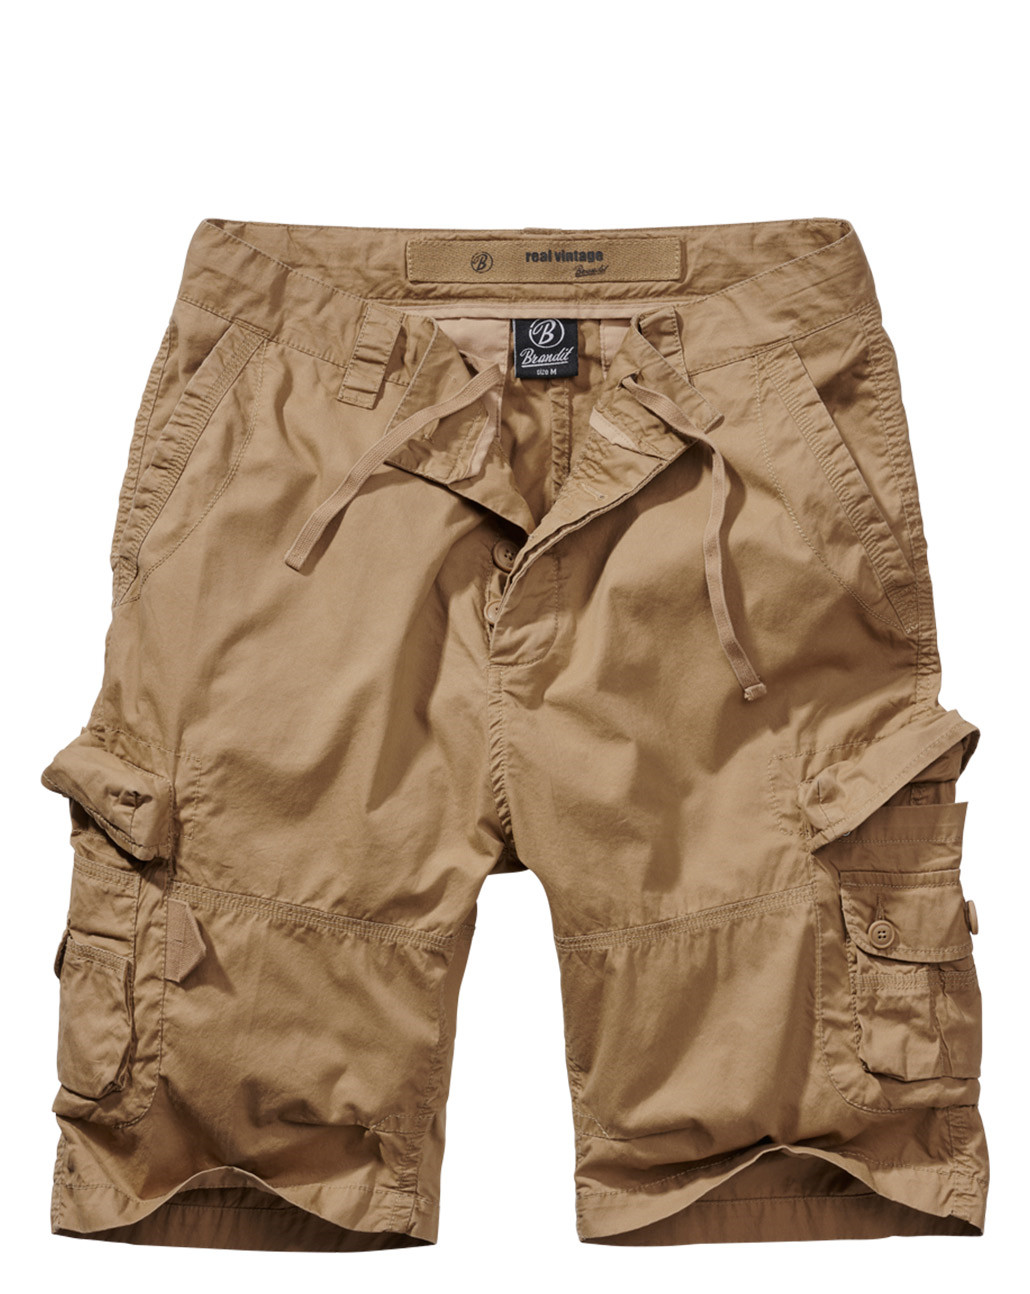 5: Brandit Ty Shorts (Camel, S)